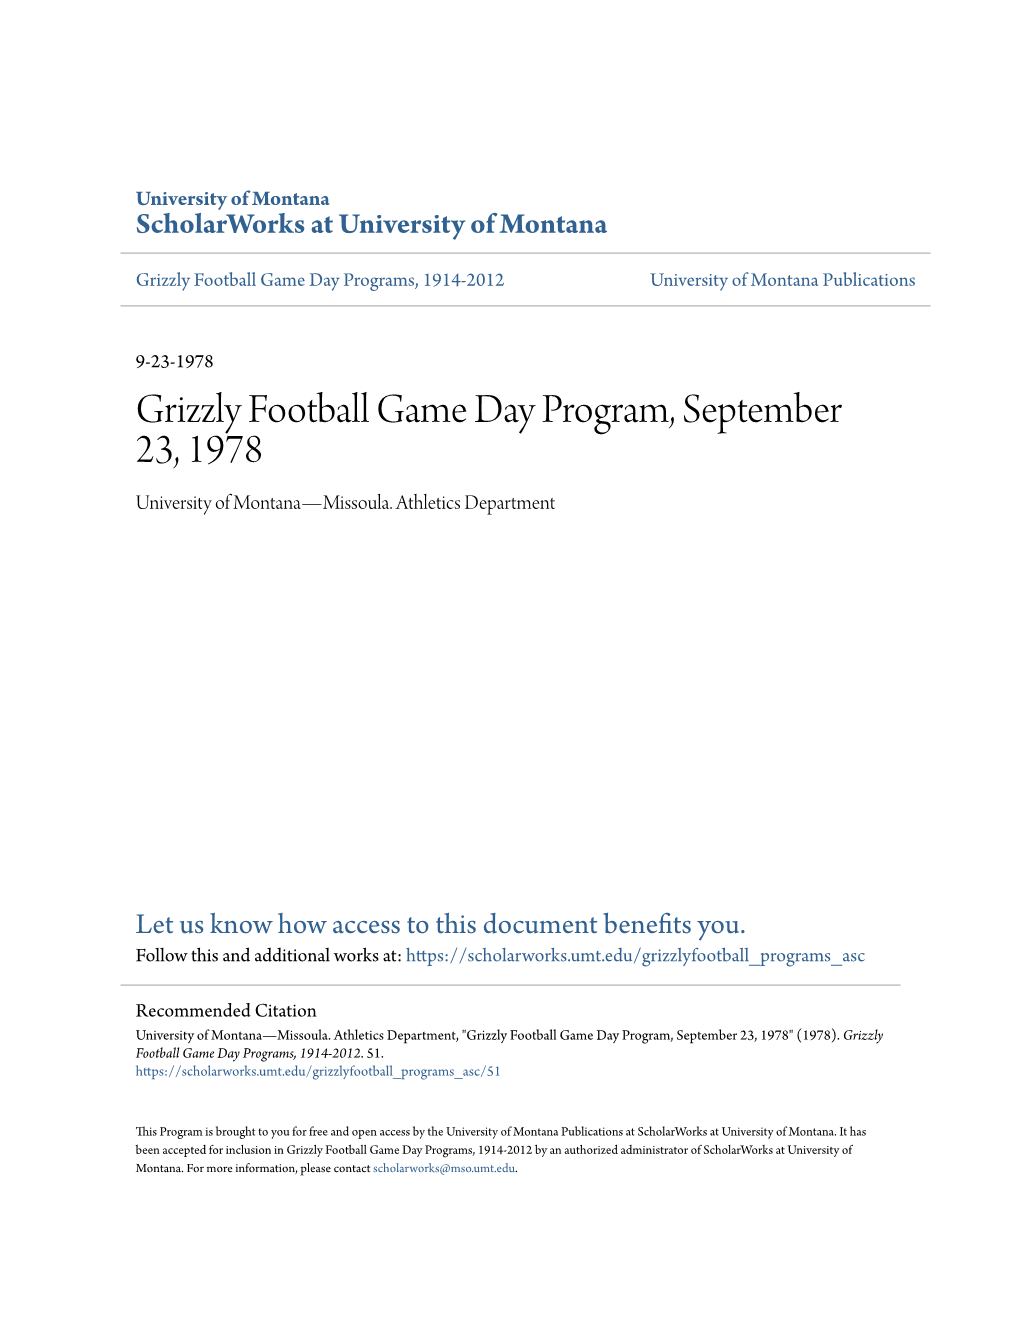 Grizzly Football Game Day Program, September 23, 1978 University of Montana—Missoula